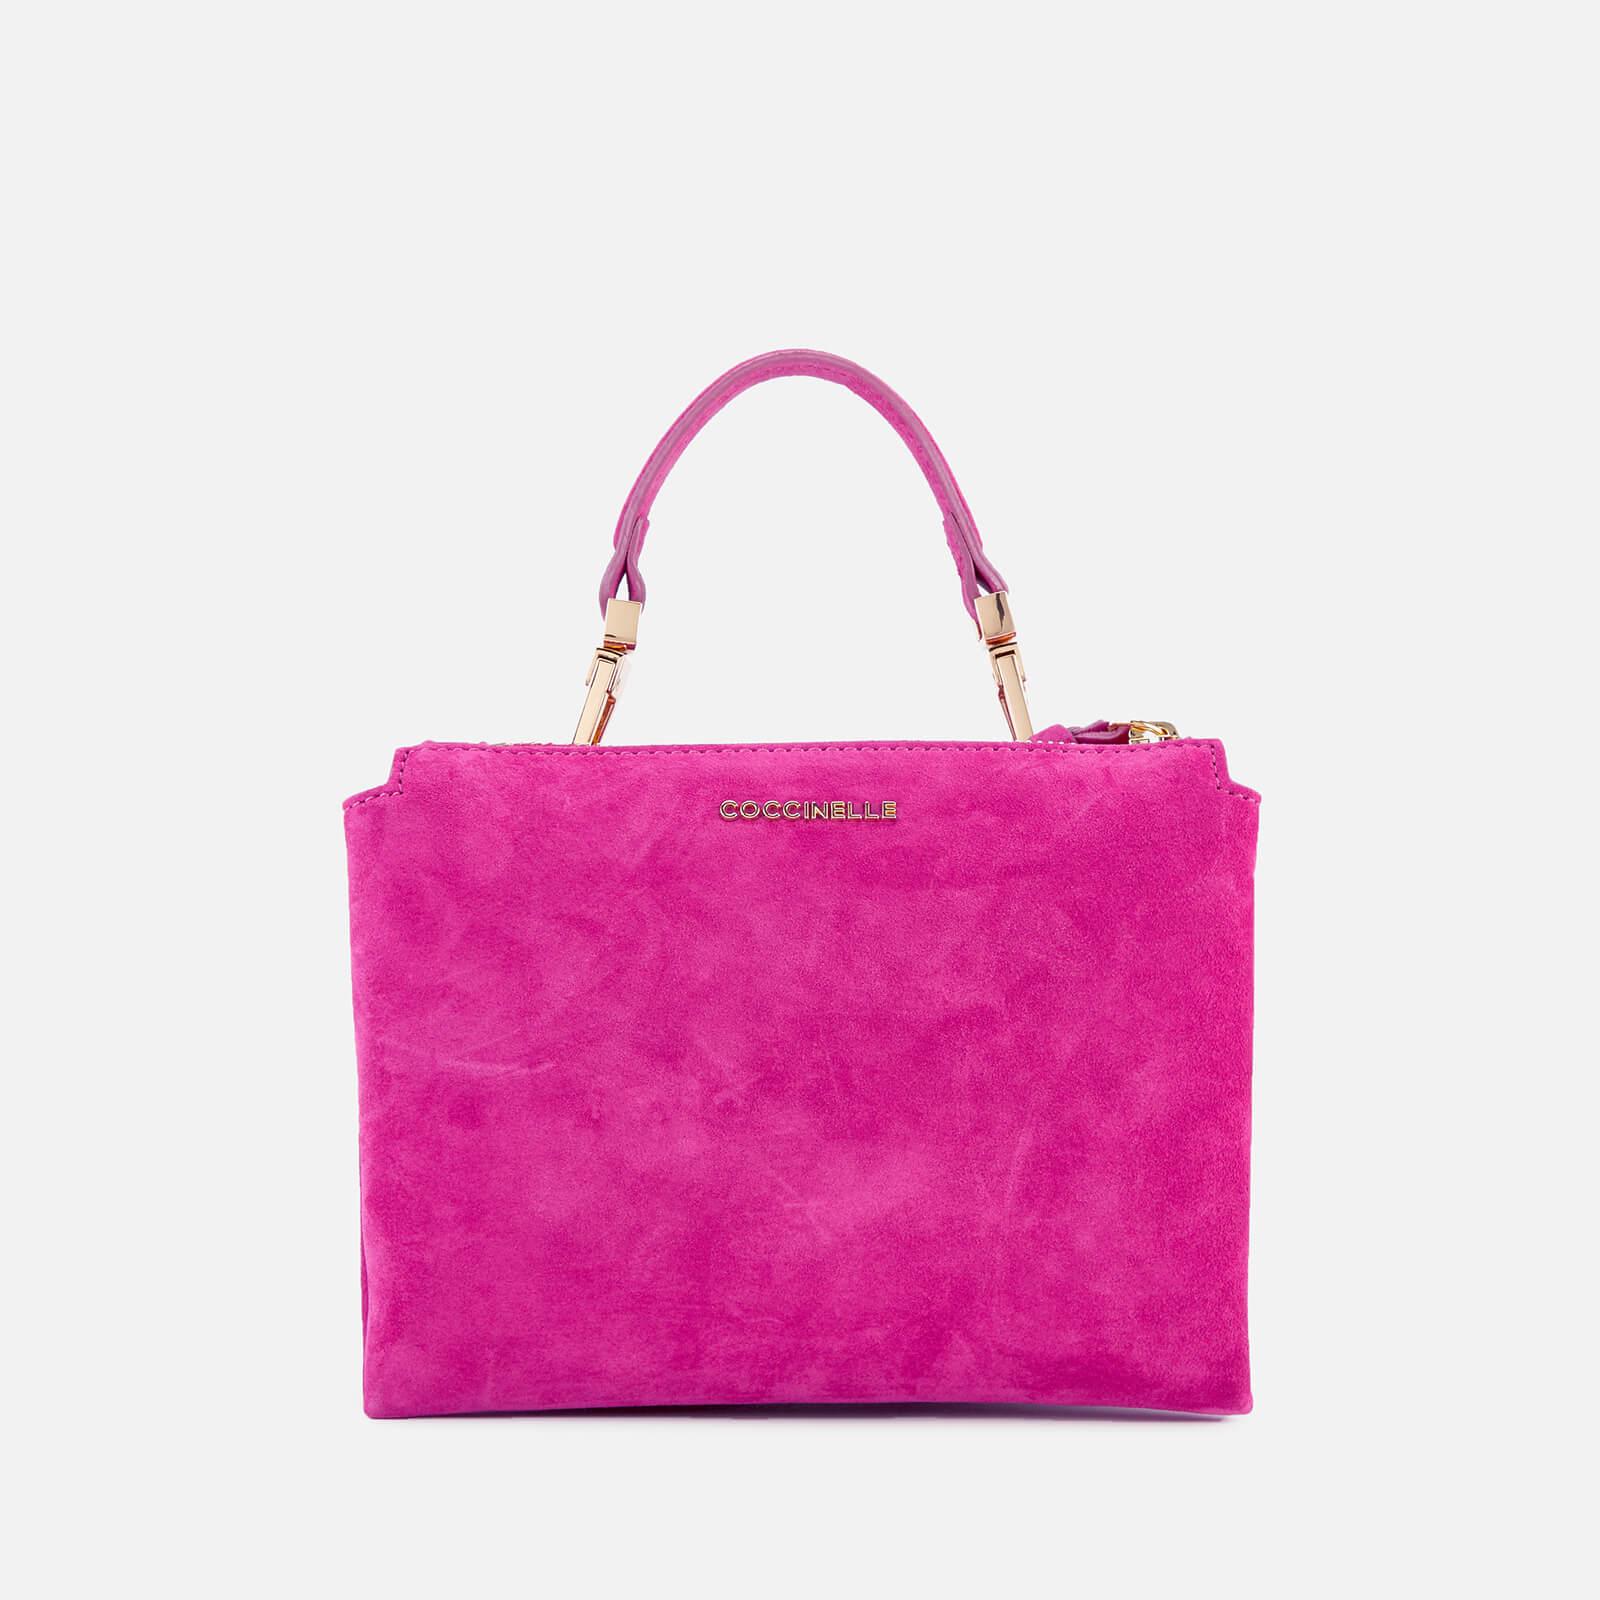 Coccinelle Arlettis Suede Cross Body Bag in Pink | Lyst Australia